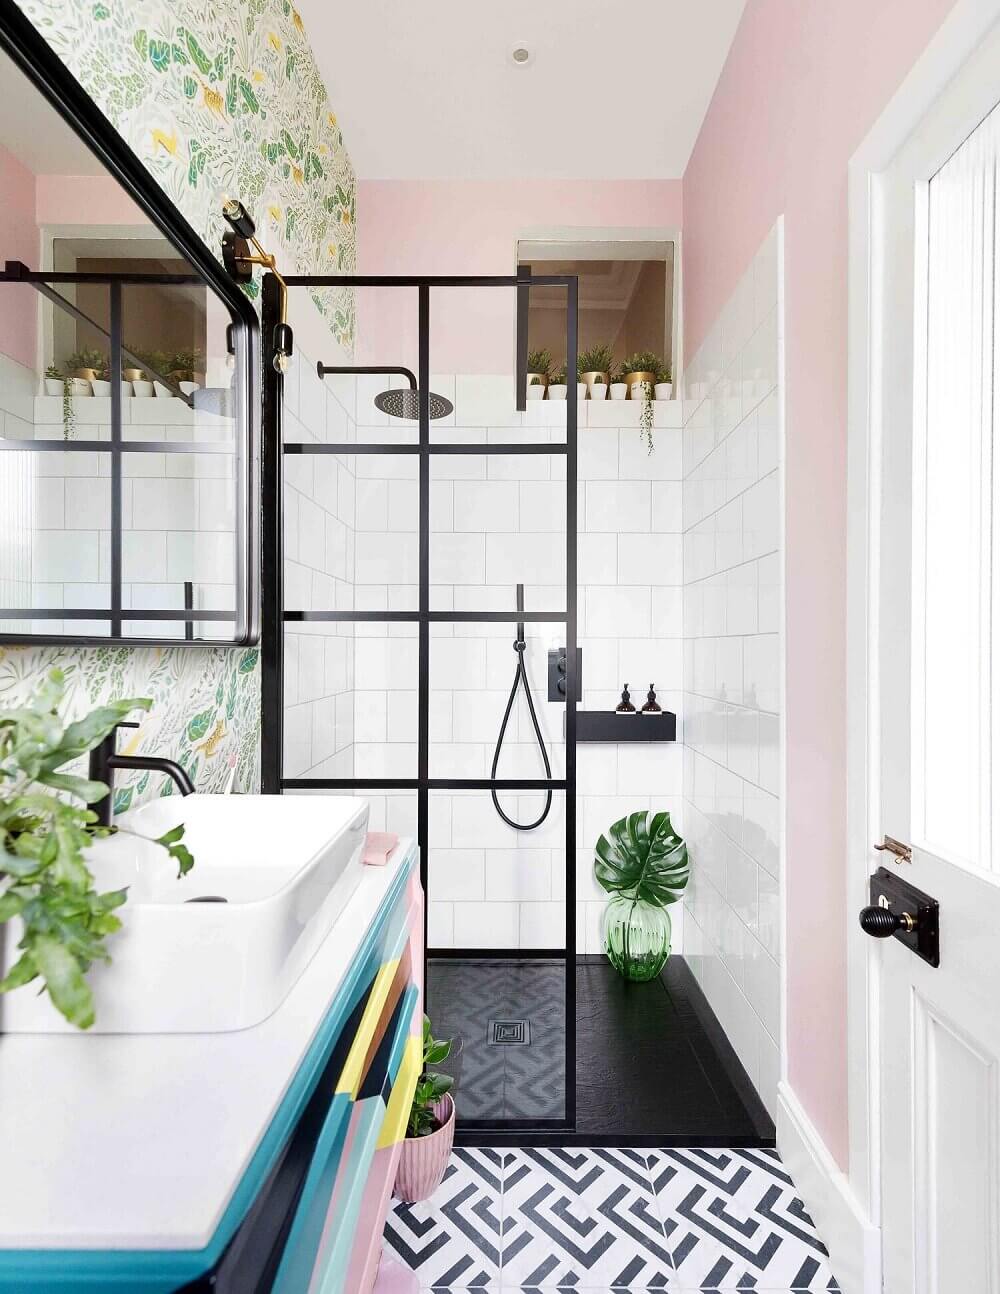 Small Bathroom Design Ideas Tips To, Tile Ideas For Small Bathroom With Tub